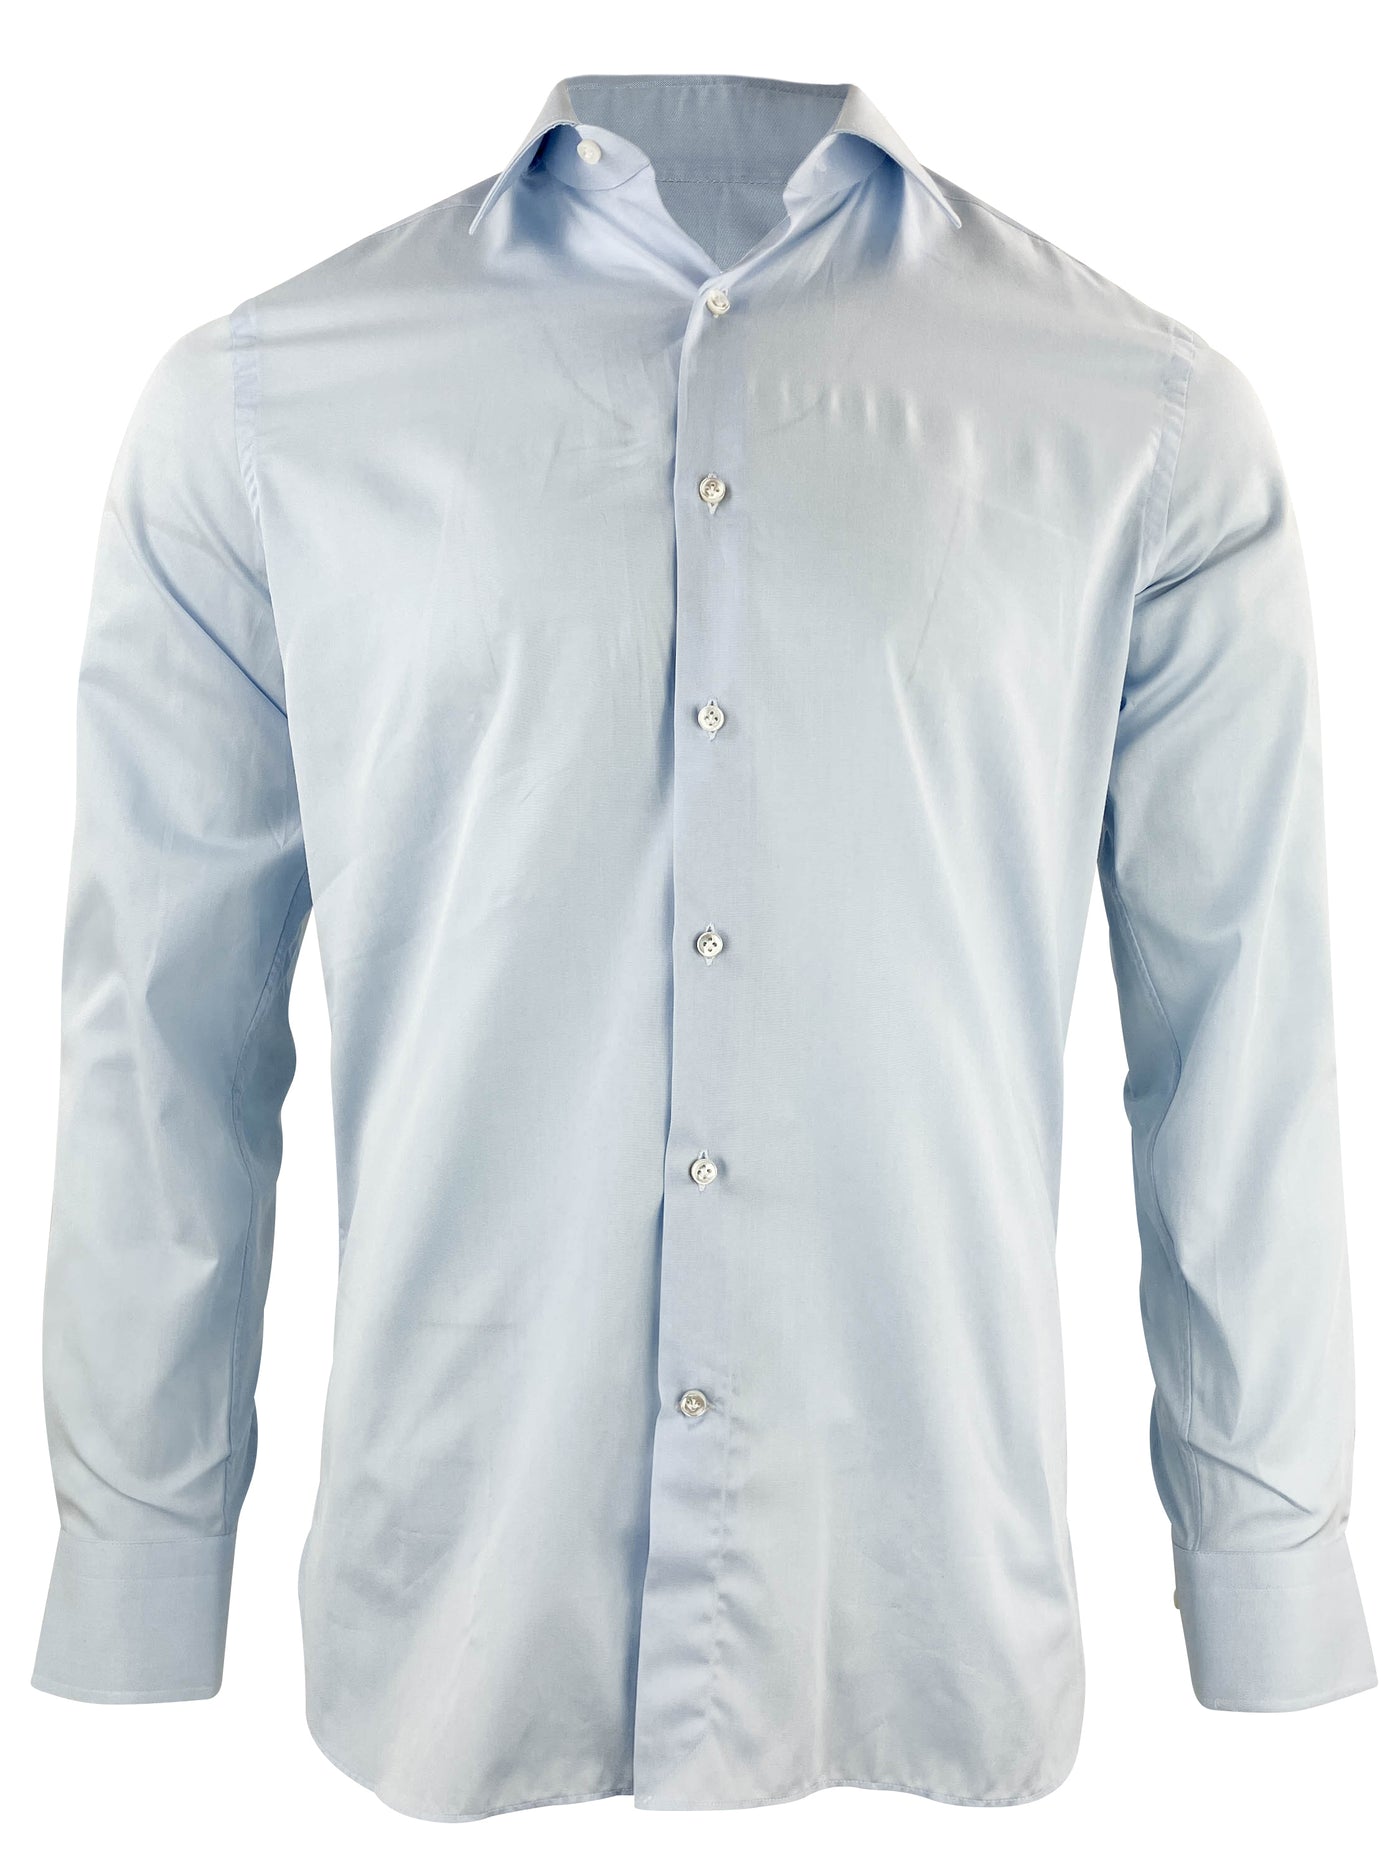 Sonrisa Cotton Poplin Button Down Shirt in Light Blue - Discounts on Sonrisa at UAL